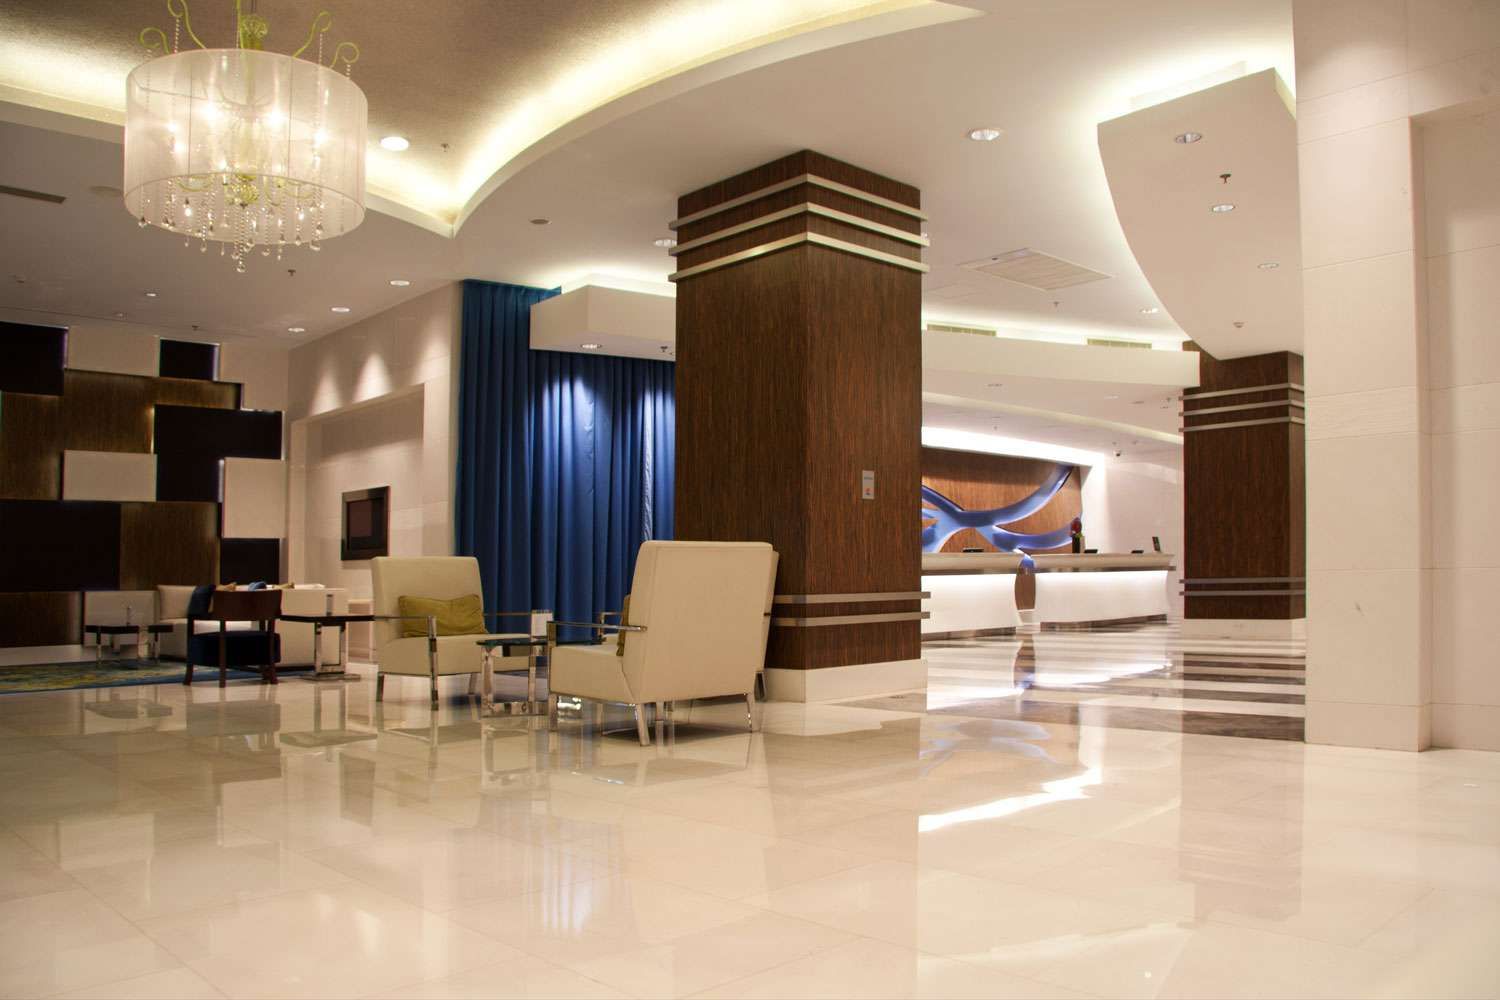 lovely hotel area with cream floor